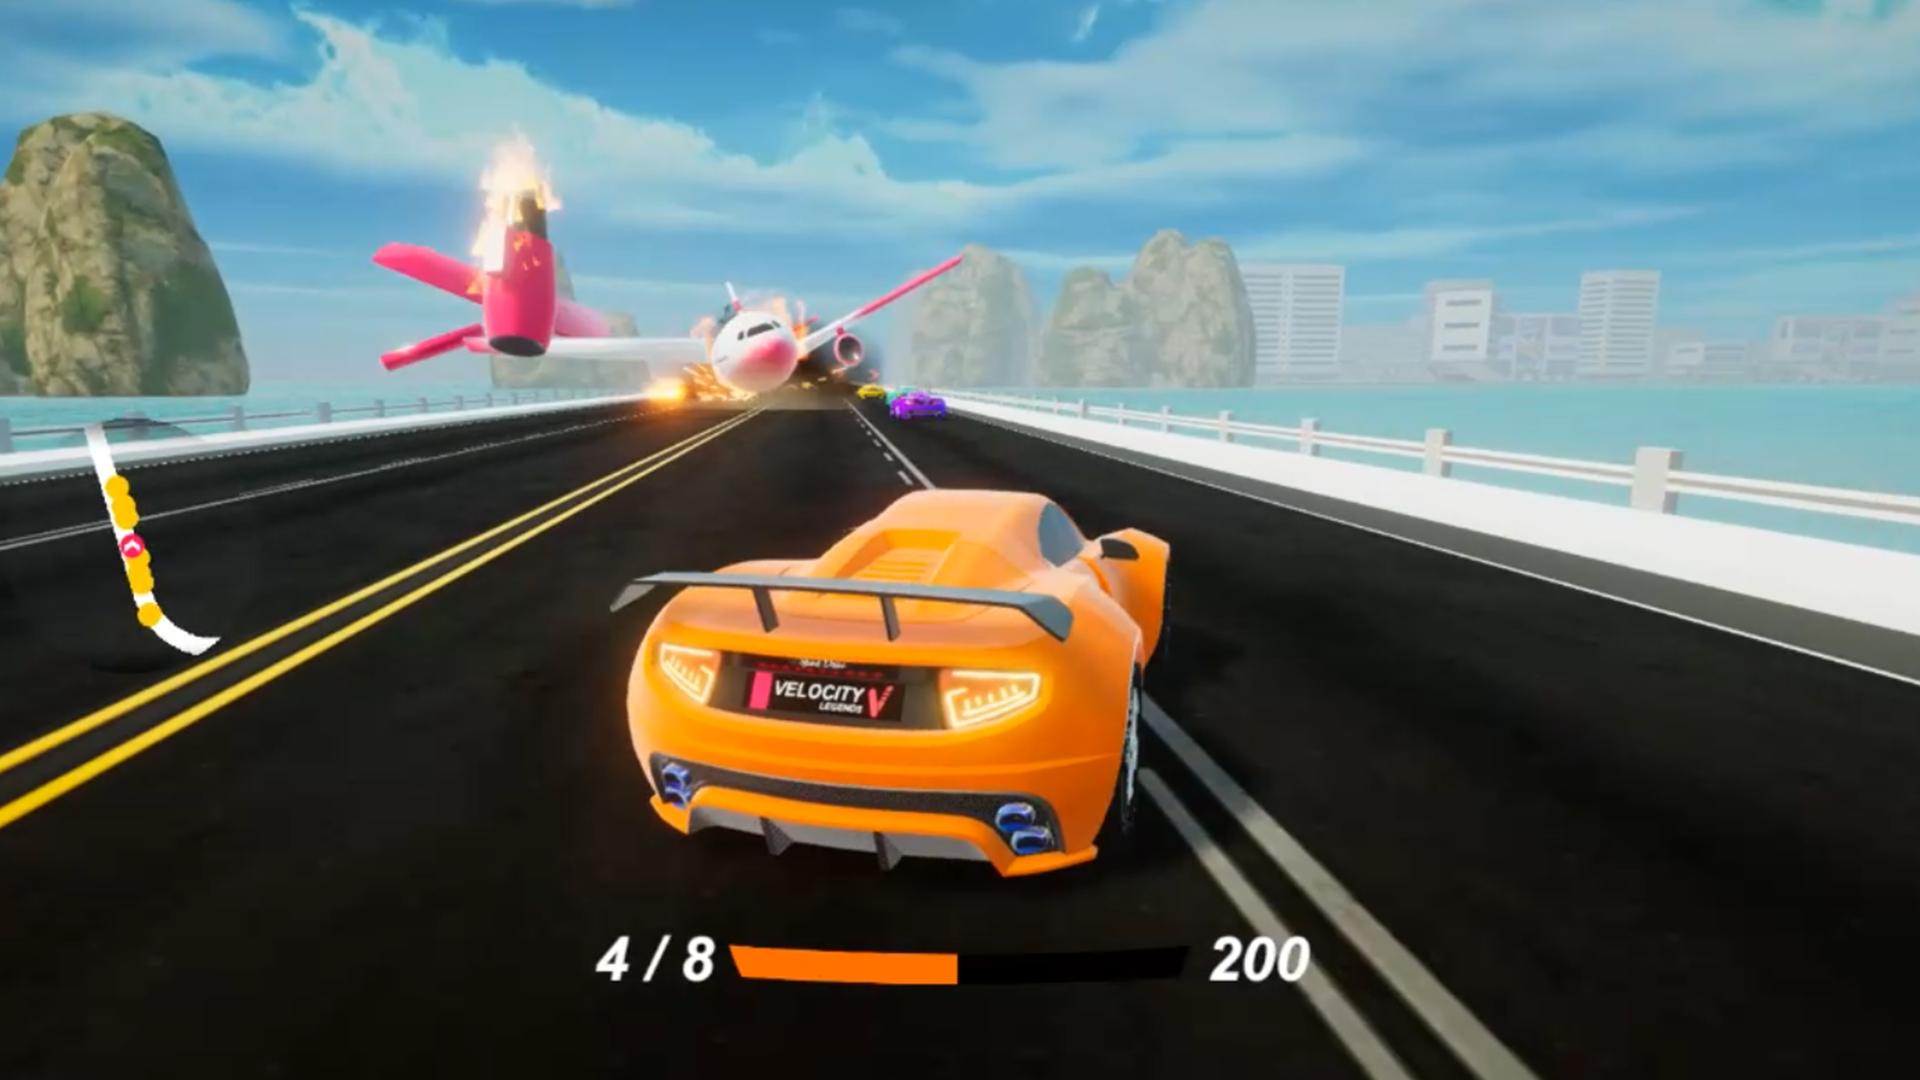 Velocity Legends Asphalt Car Action Racing Game 1.43 Screenshot 8